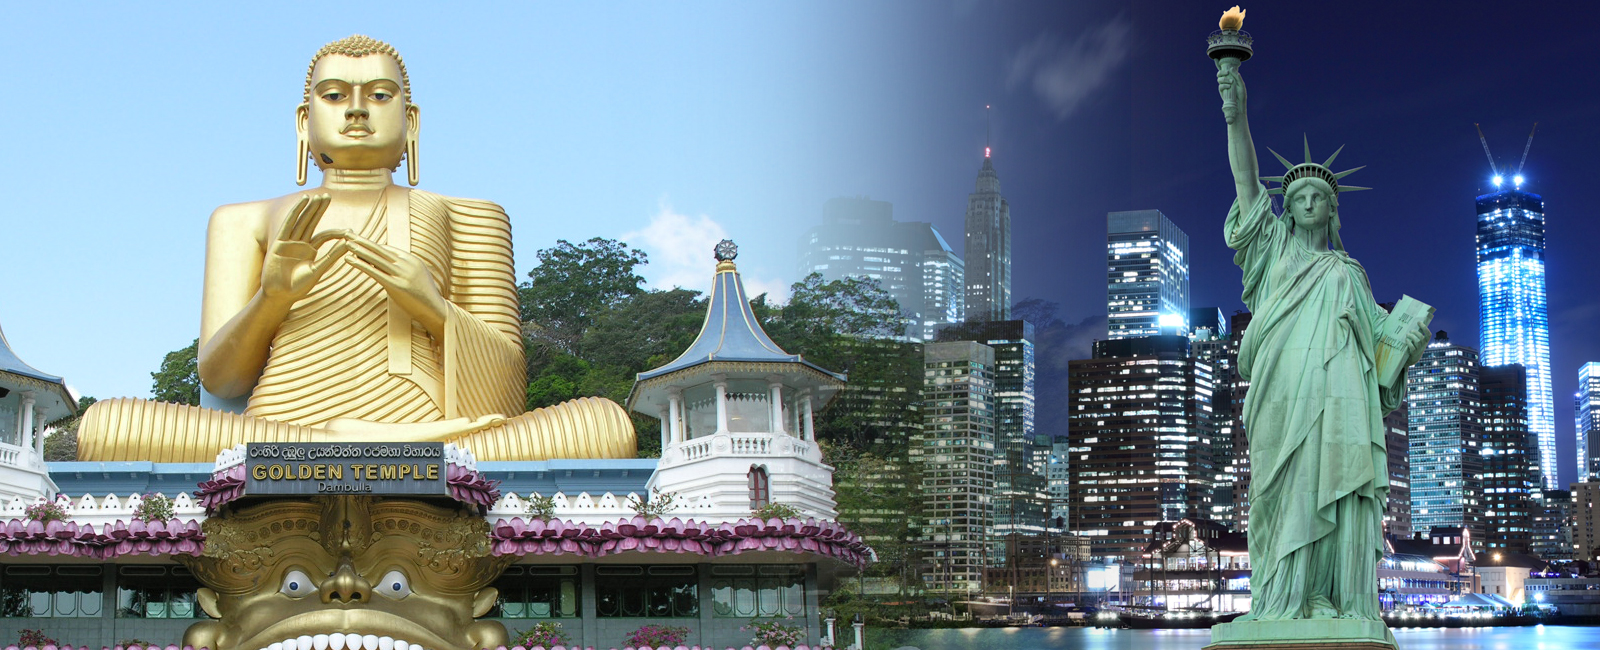 Travel From Dambulla Golden Temple Srilanka To Statue Of Liberty New York